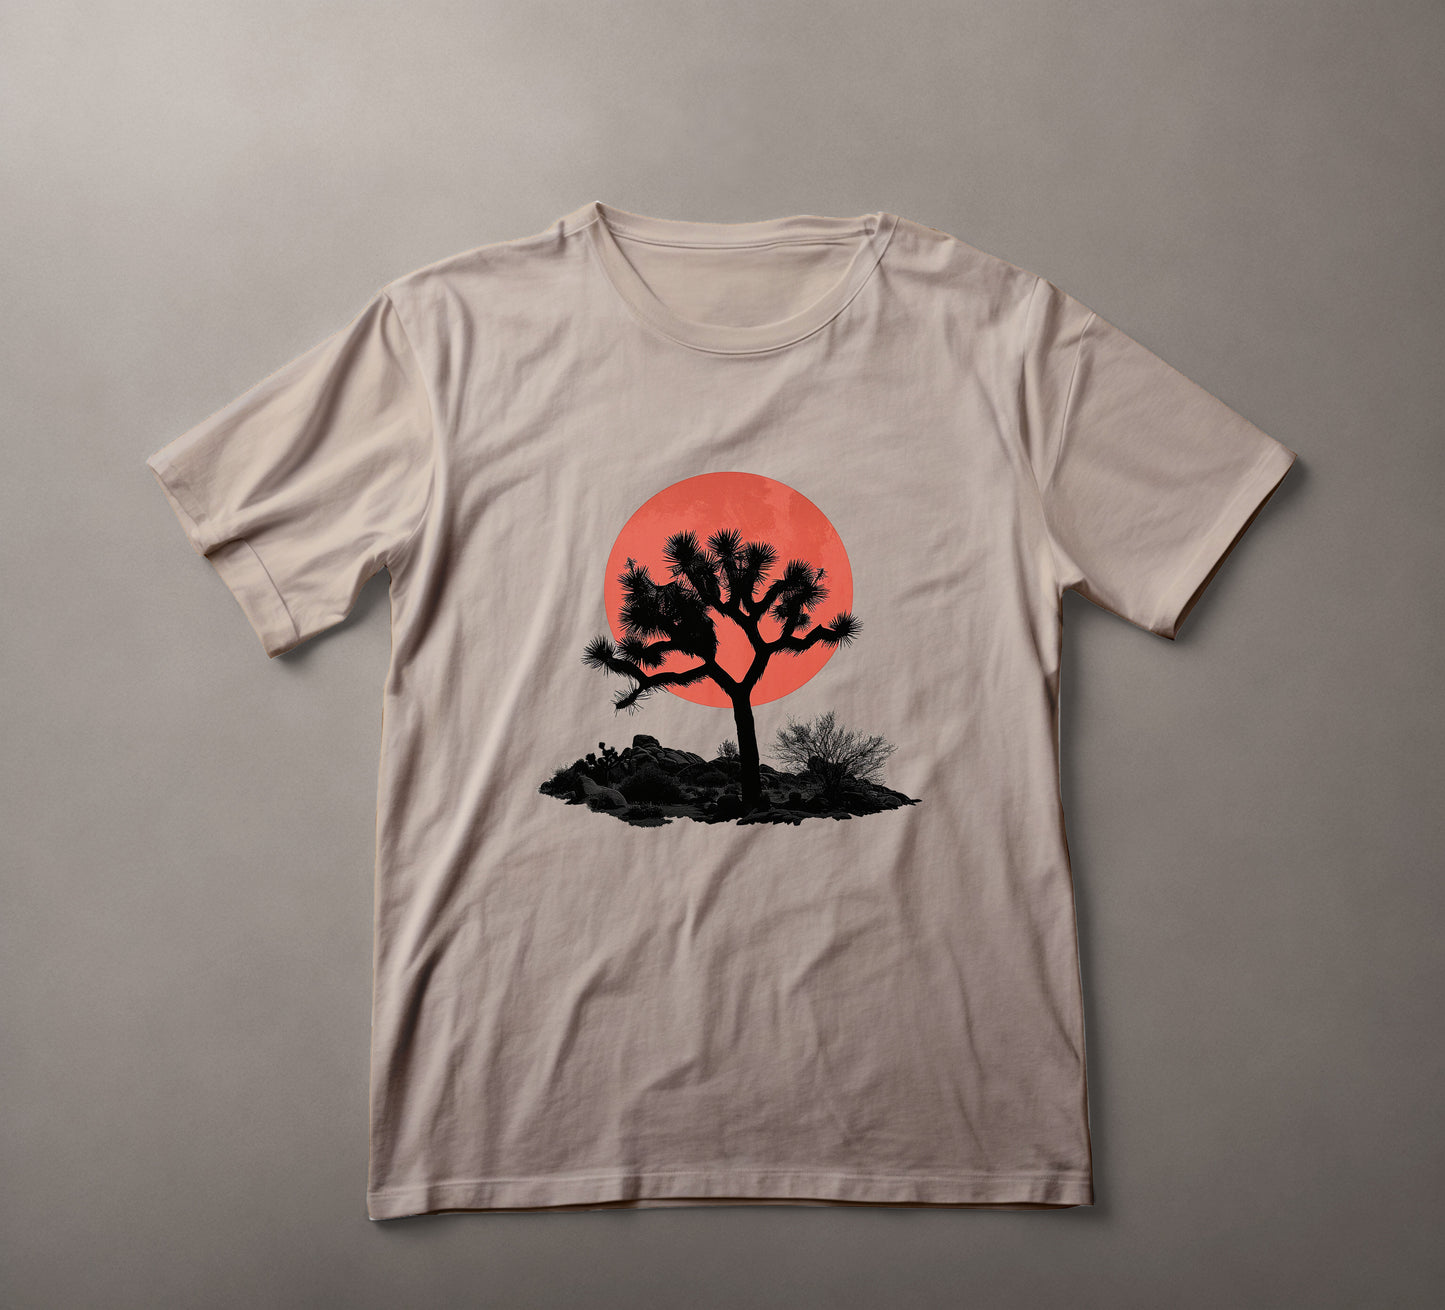 Desert silhouette, Joshua Tree, sunset backdrop, nature graphic tee, outdoor adventure, travel design, minimalist tree illustration, warm tones, hiking apparel, casual style